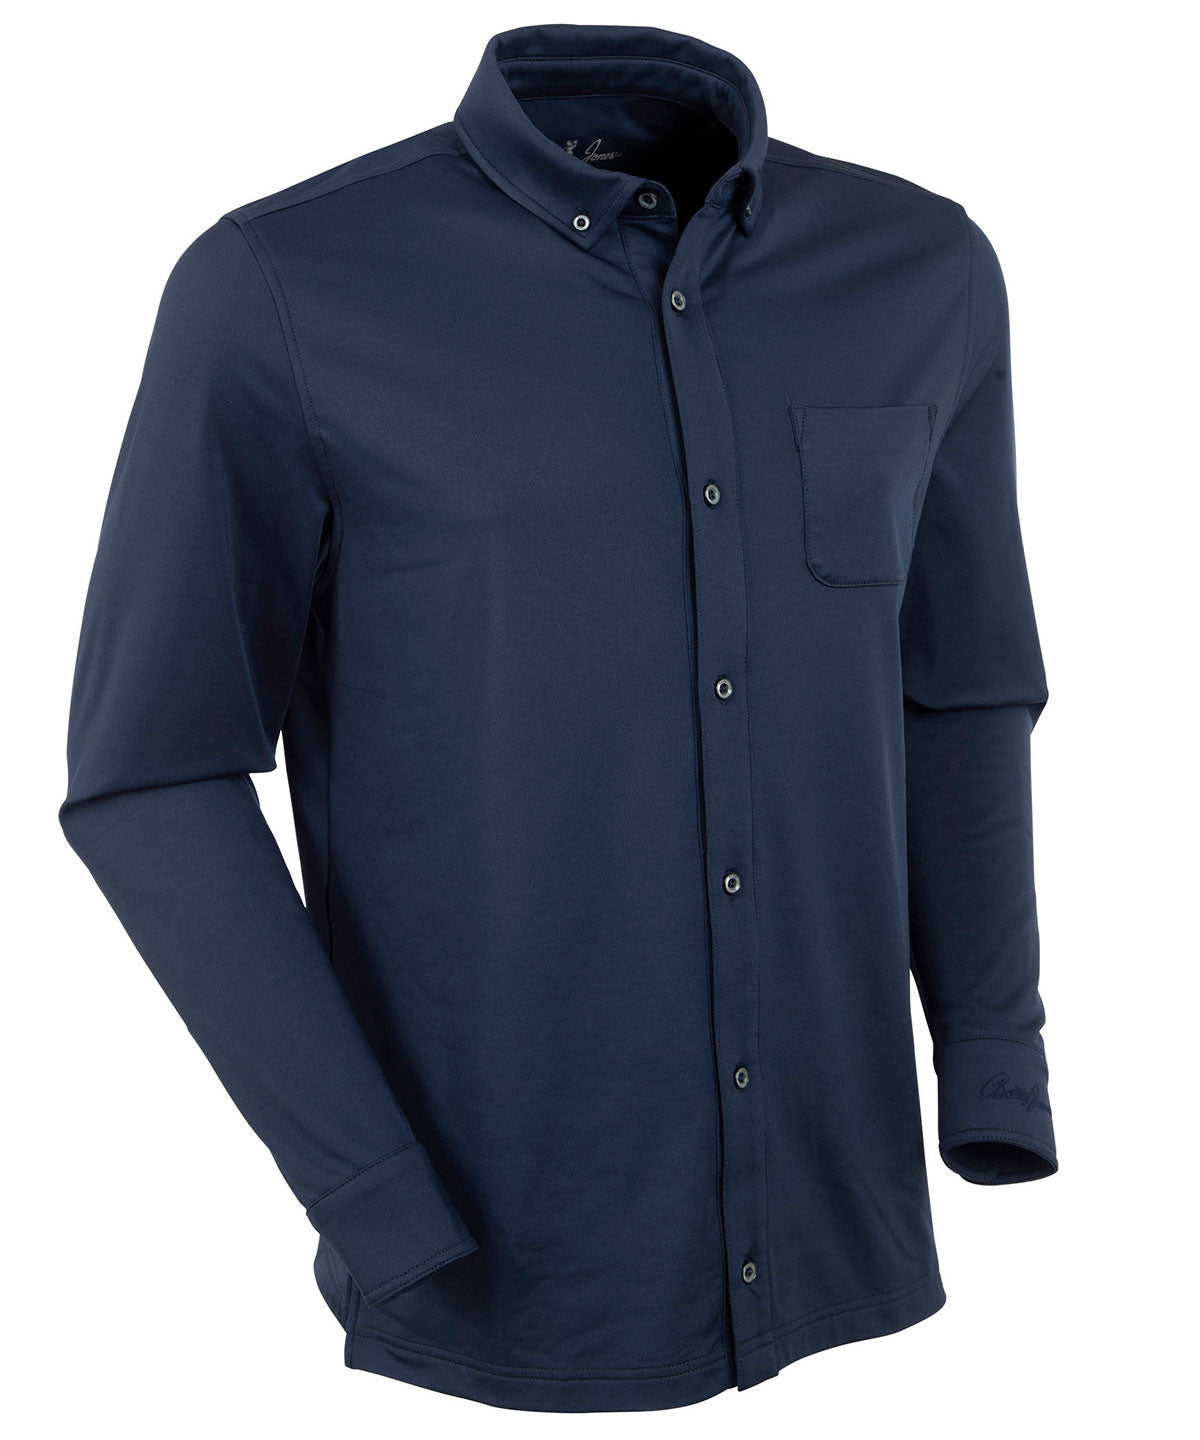 center back seam & back cuff detail  Menswear, Up shirt, Button up shirts